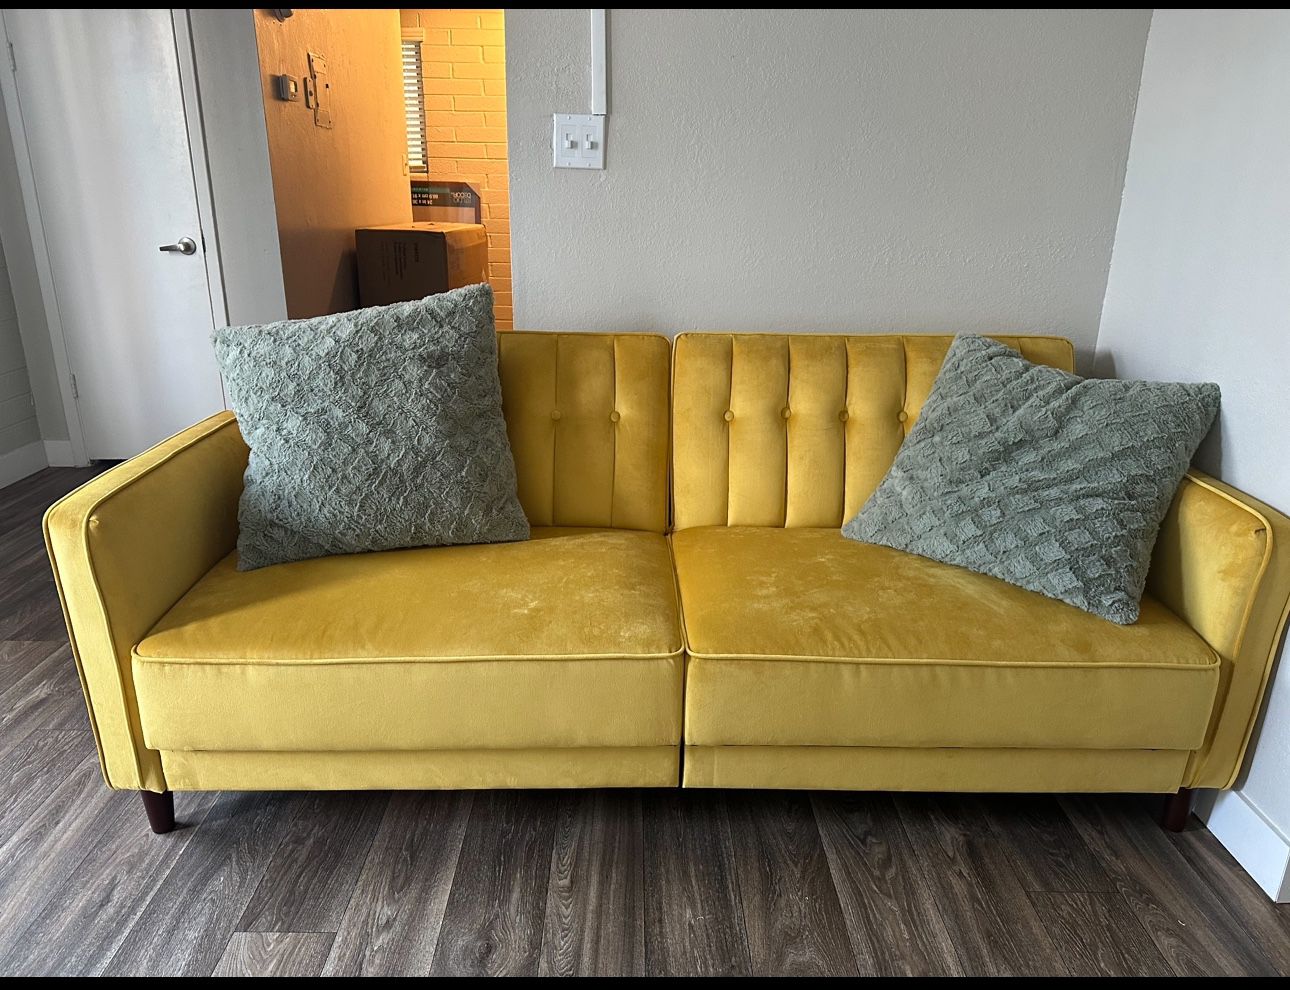 Ashley furniture mustard Yellow couch/futon